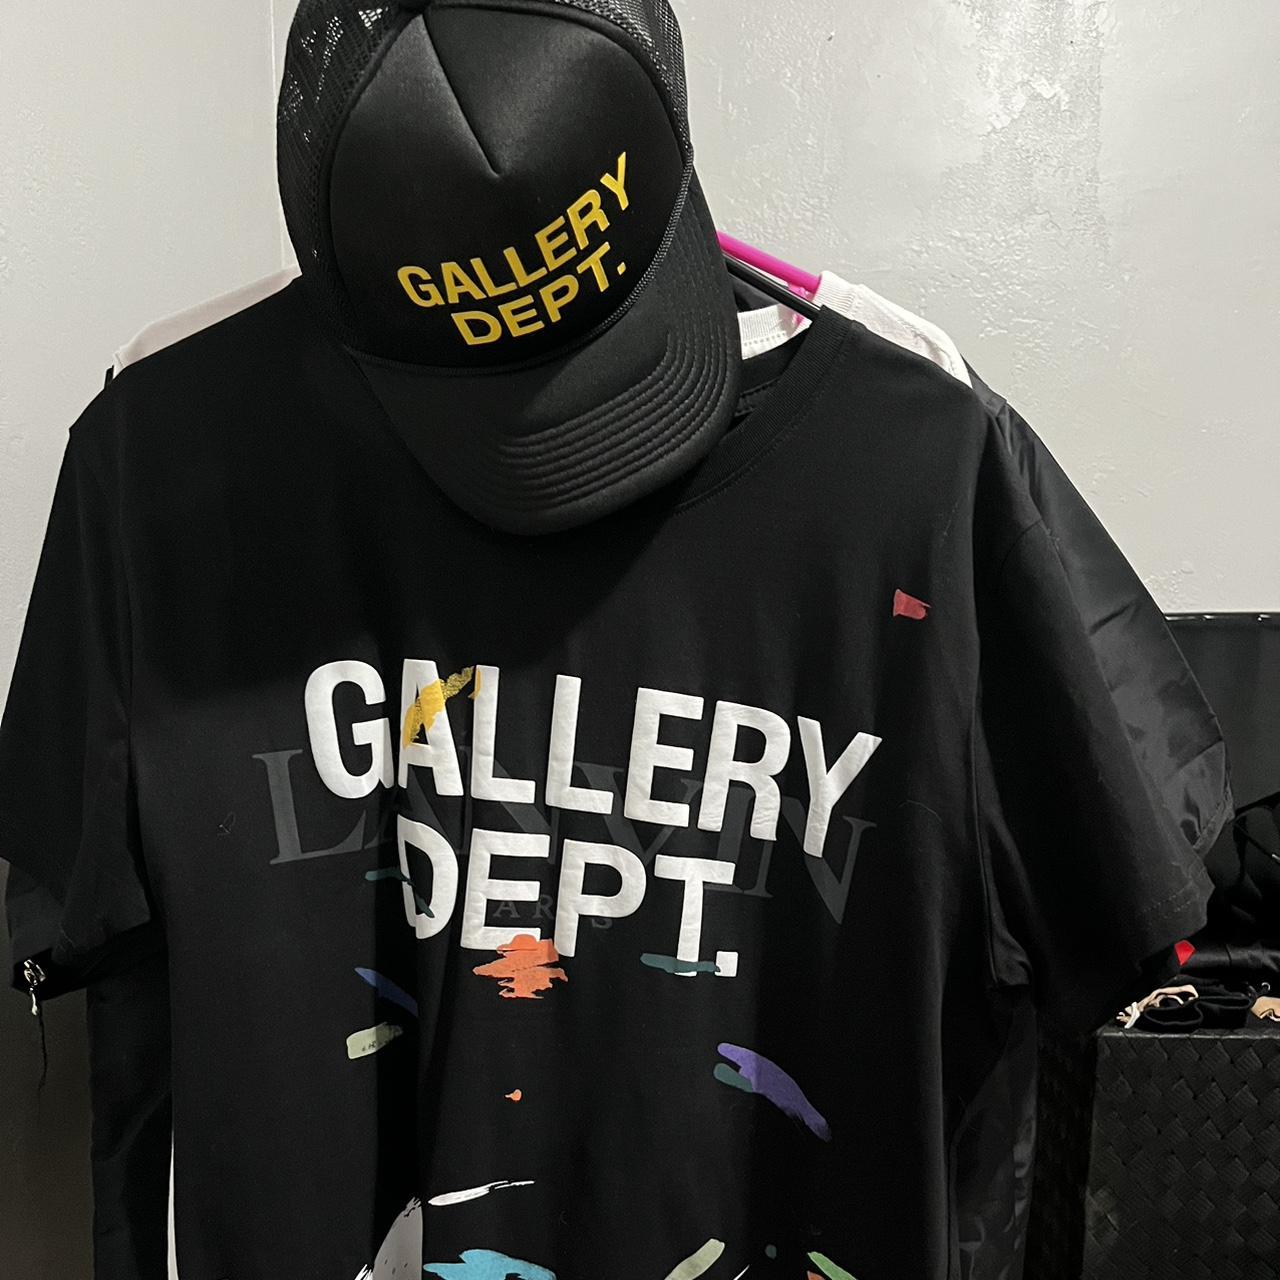 Bead Gallery Men's Black T-shirt